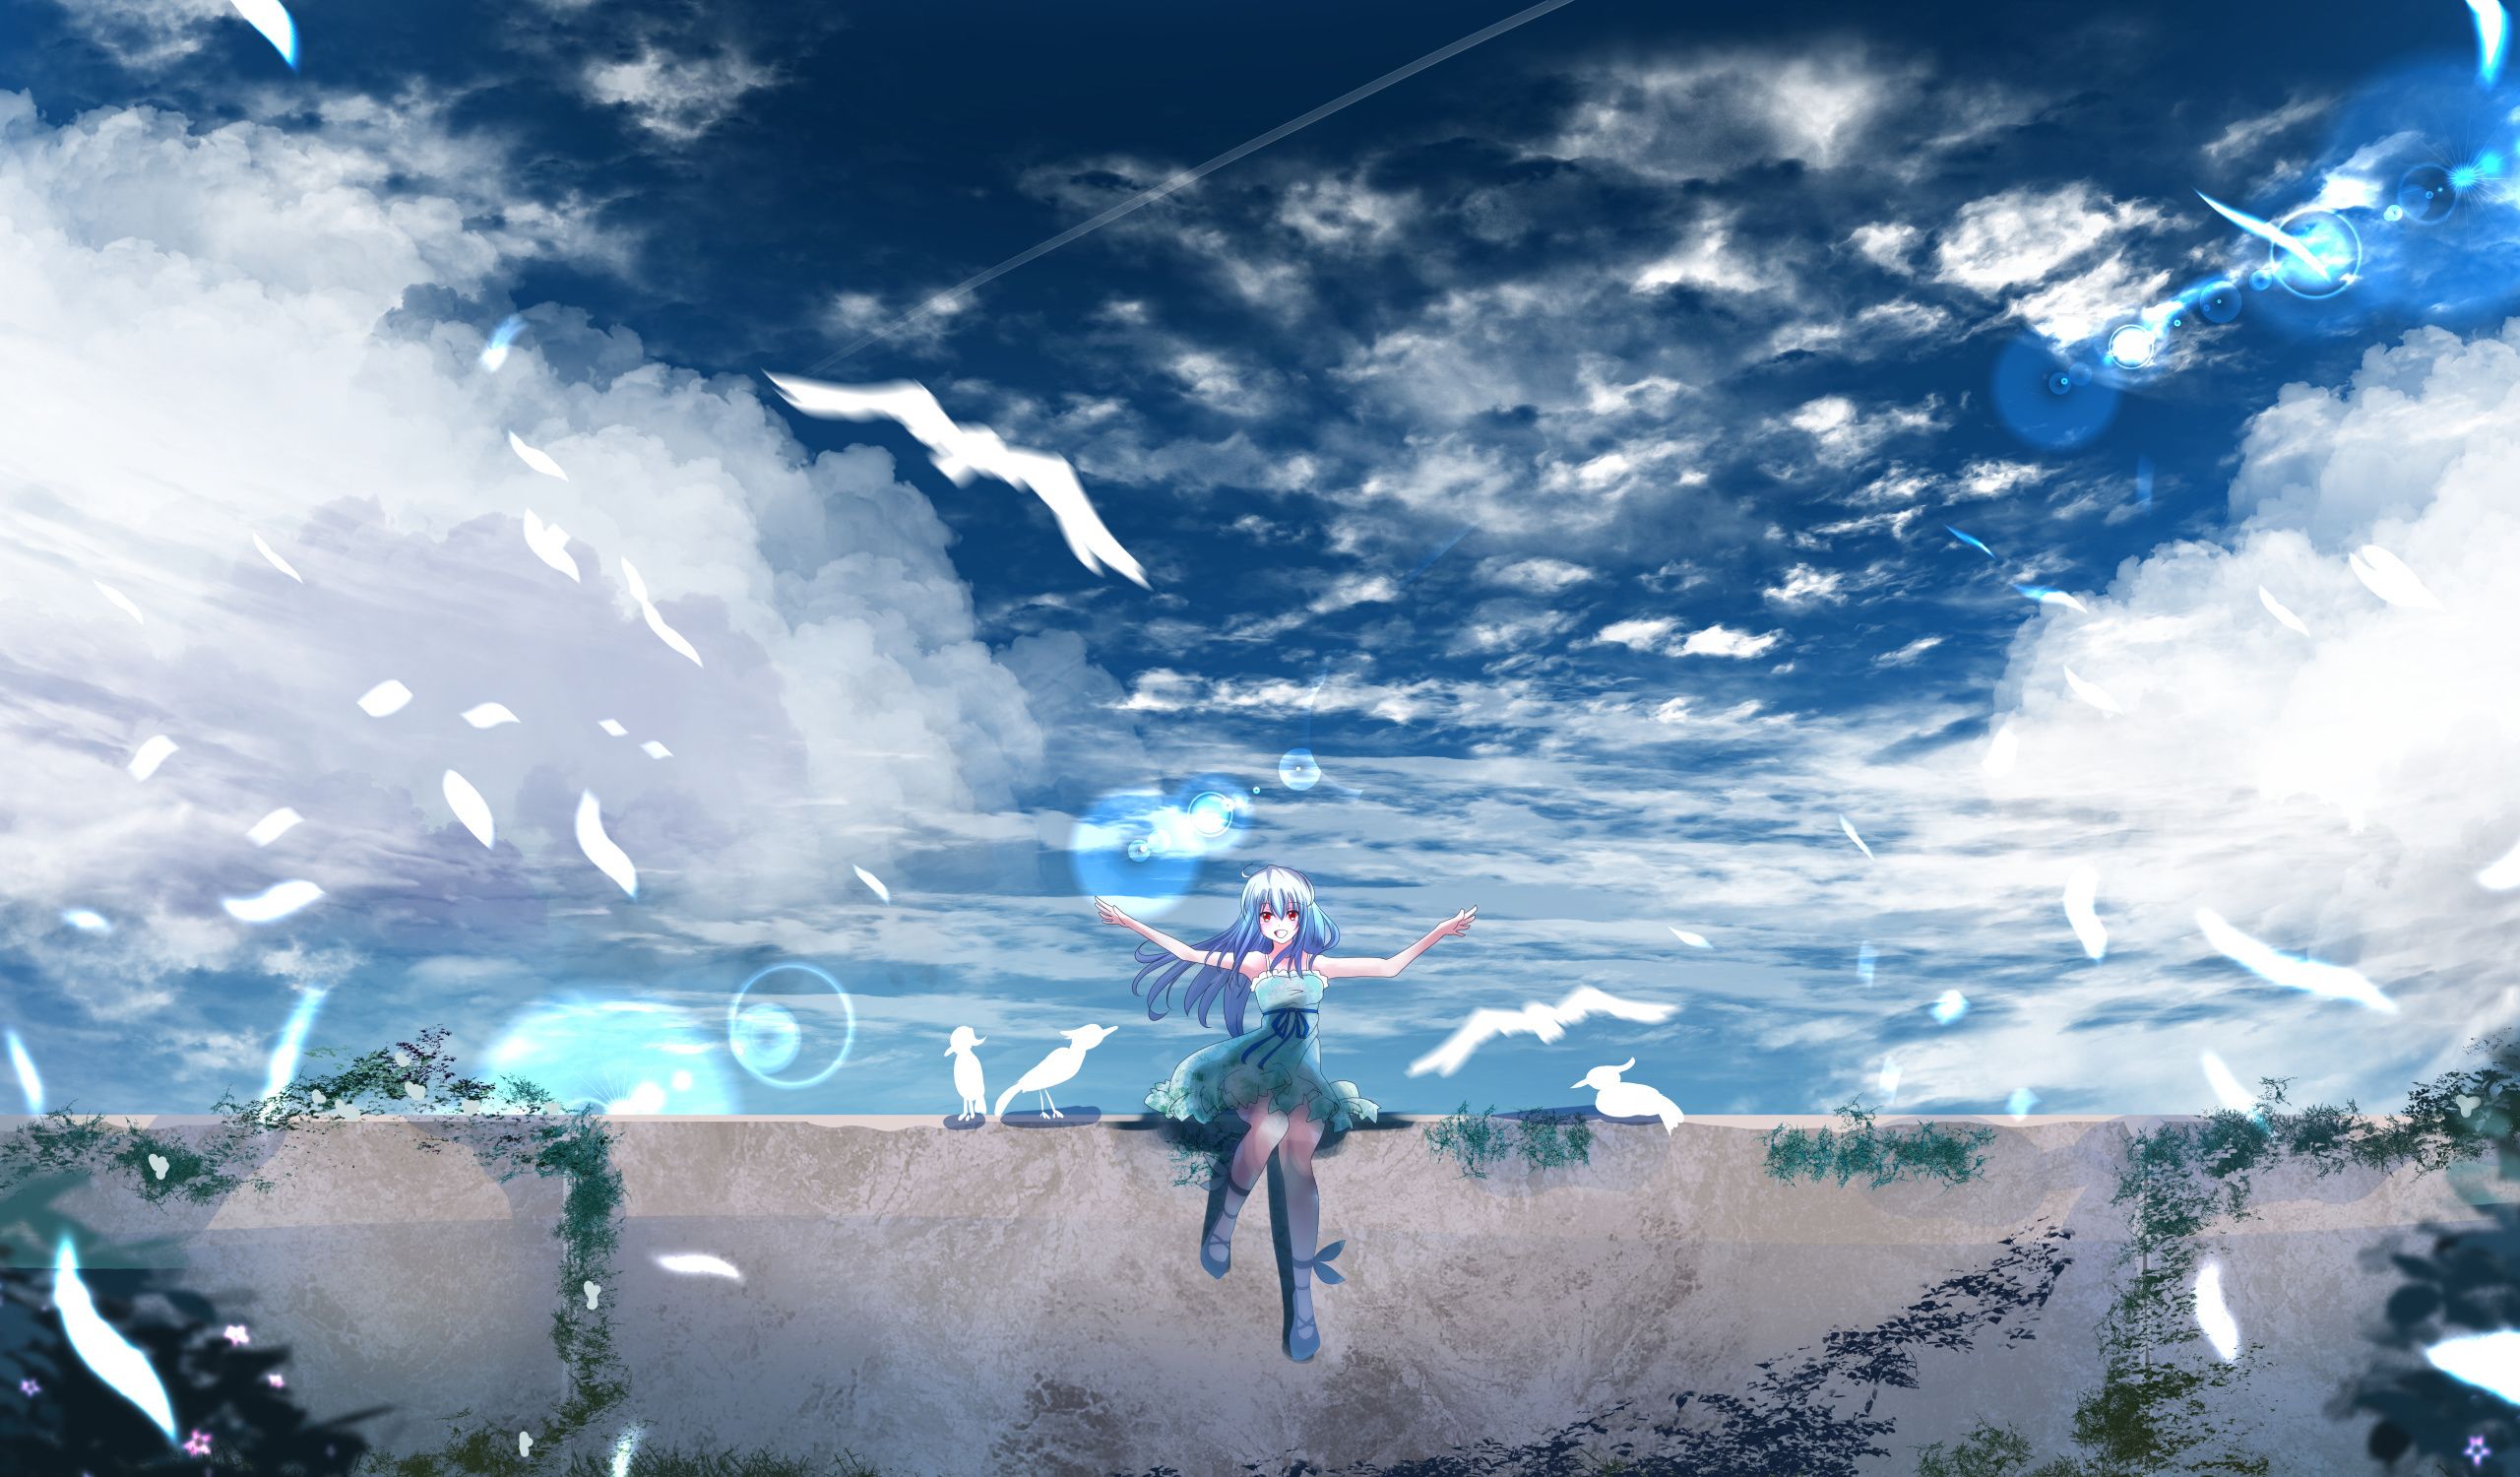 Download 2560x1600 wallpaper beautiful scenery, anime, outdoor